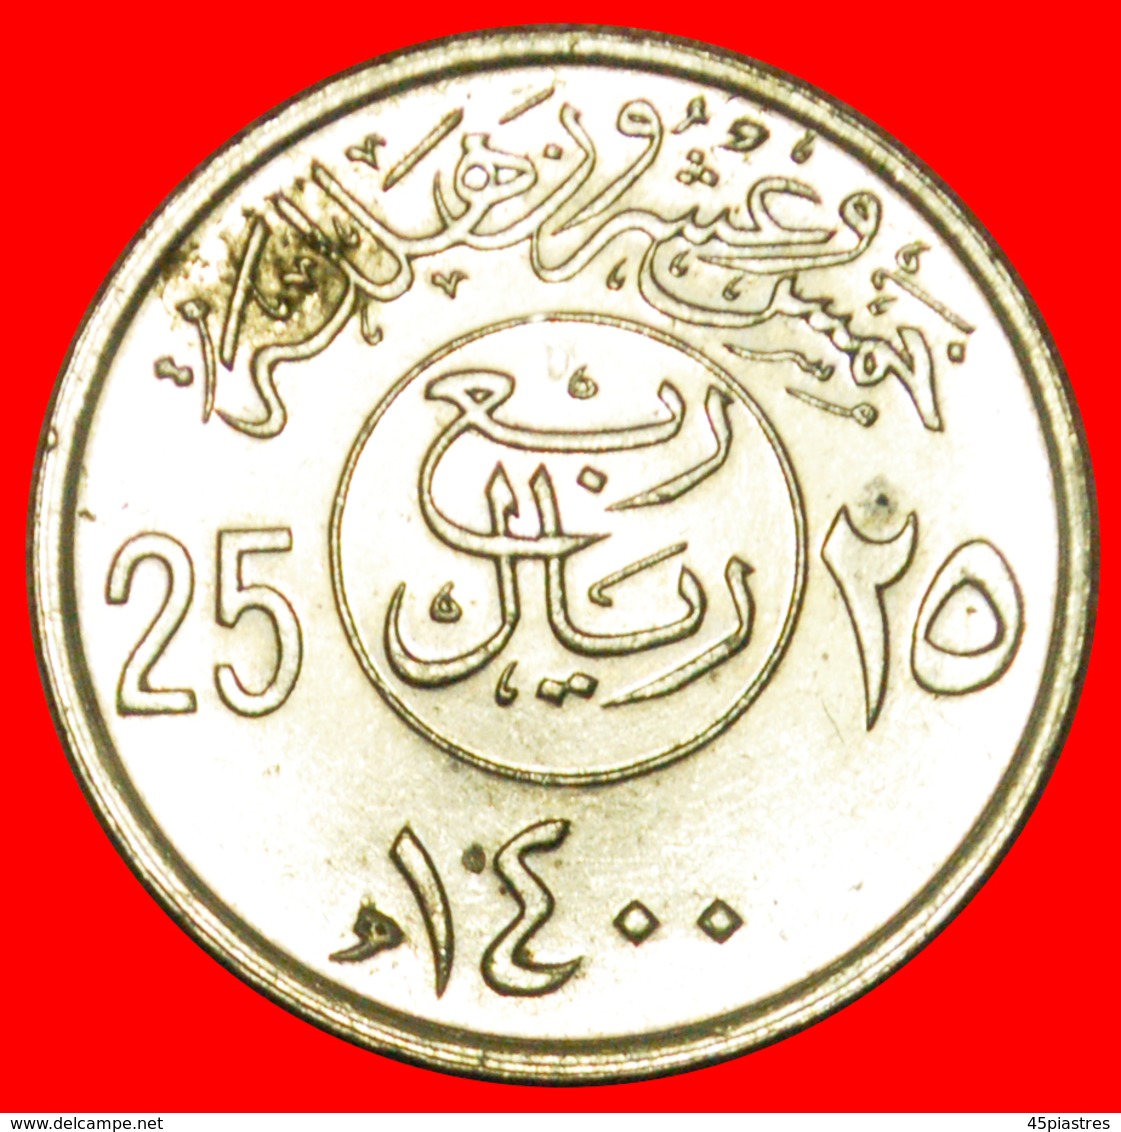 # DAGGERS AND PALMTREE: SAUDI ARABIA ★ 25 HALALA / 1/4  RIYAL 1400 (1980) MINT LUSTER! LOW START ★ NO RESERVE! - Saudi Arabia